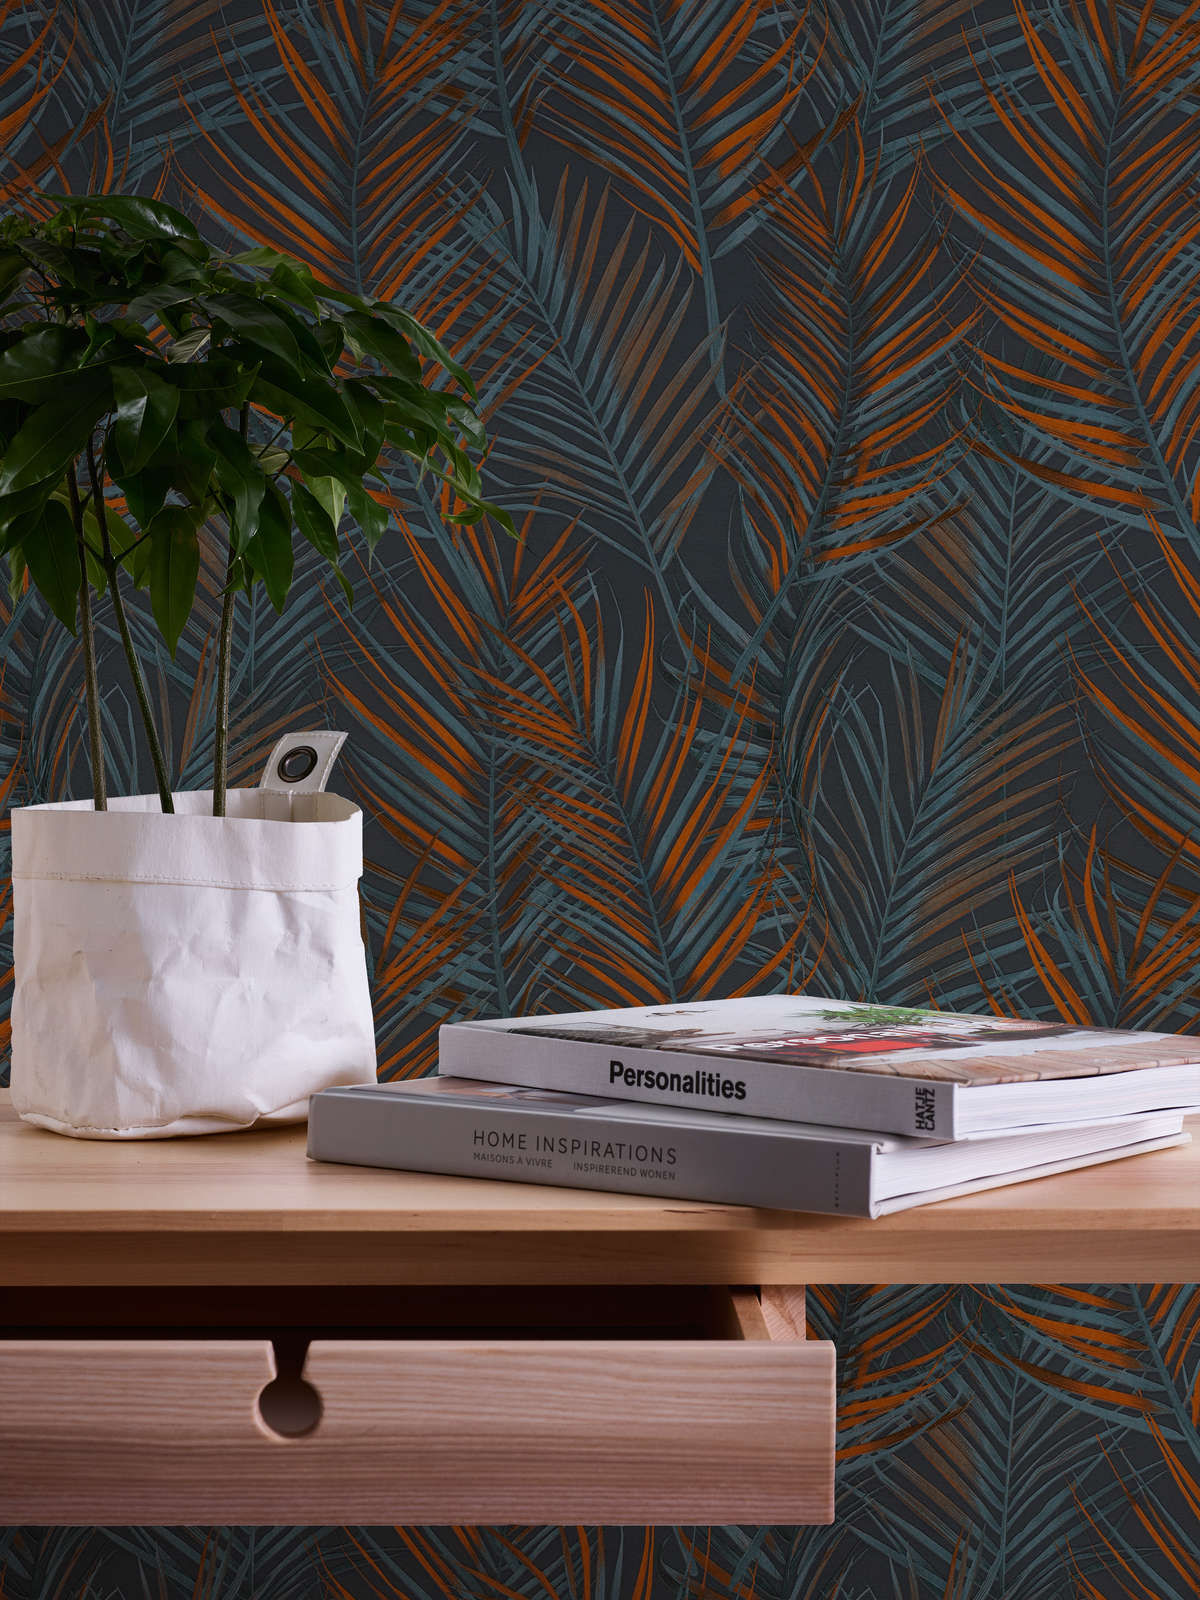             Jungle wallpaper with palm leaves in matt - black, orange, petrol
        